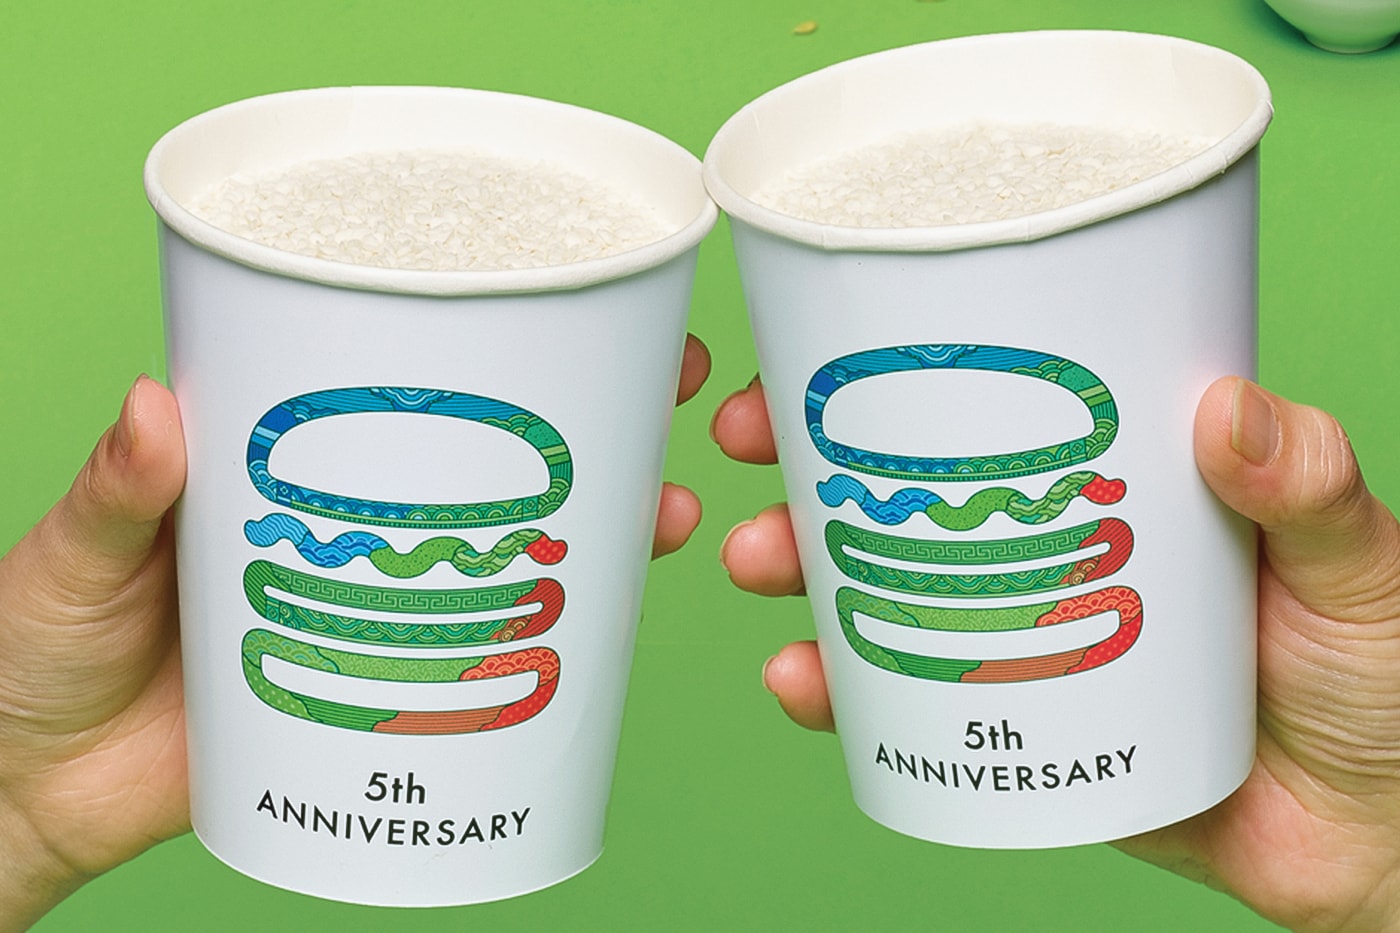 Shake Shack Korea 5th-Anniversary Menu Launch Info Hanilgwan Jipyeong Jujo Burger Makgeolli Shake Bulgogi 